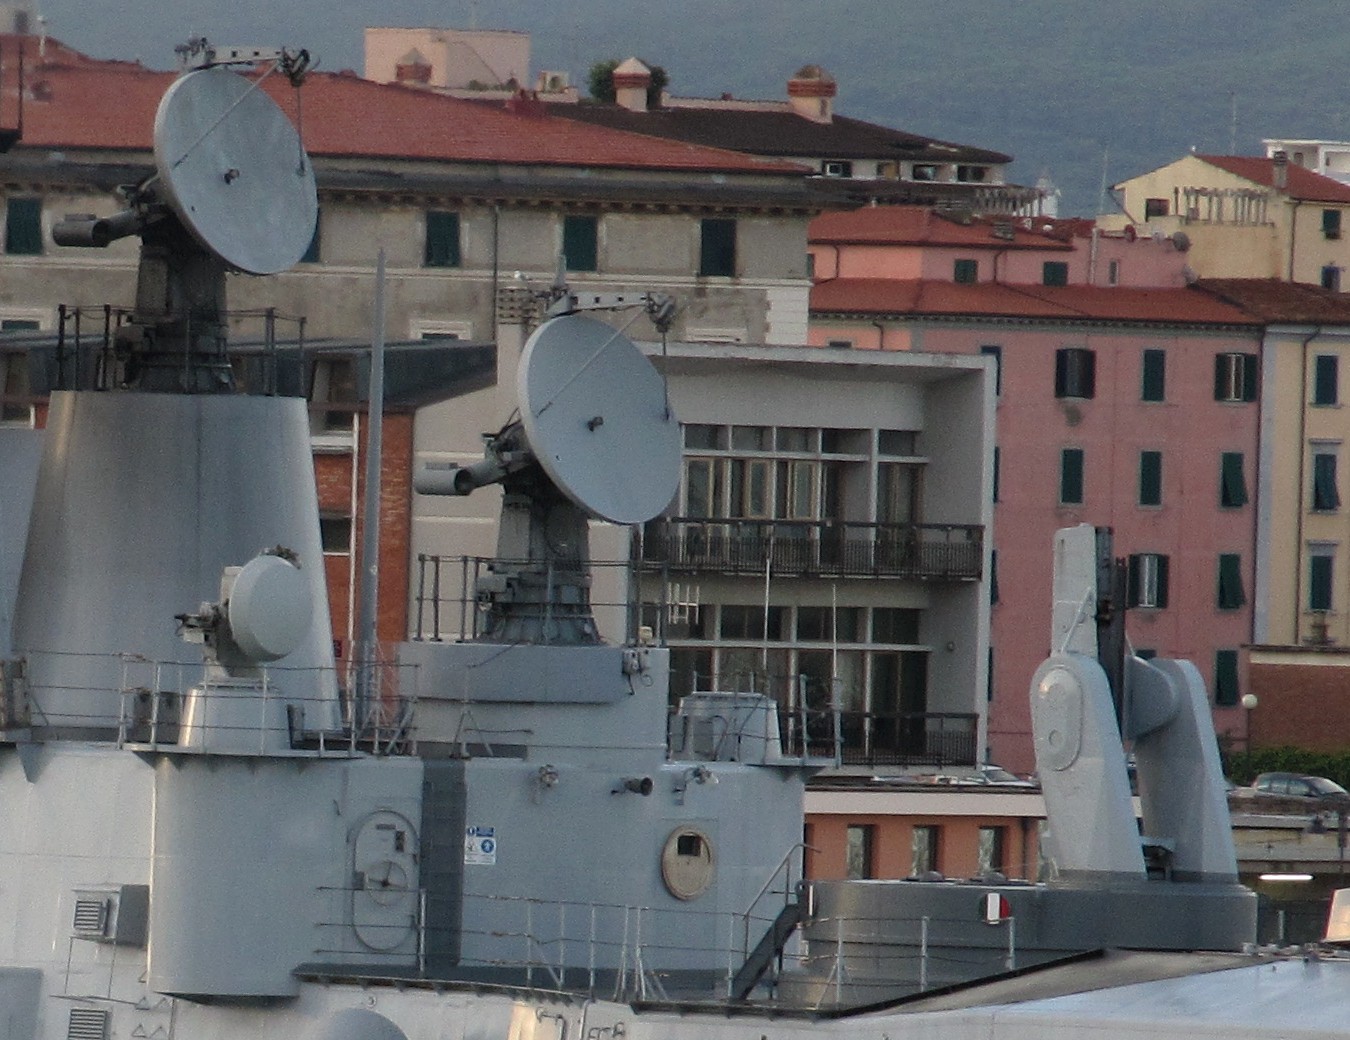 durand de la penne class guided misssile destroyer ddg italian navy marina militare mmi mk.13 launcher rim-66 standard sm-1mr an/spg-51 fire control target illuminator